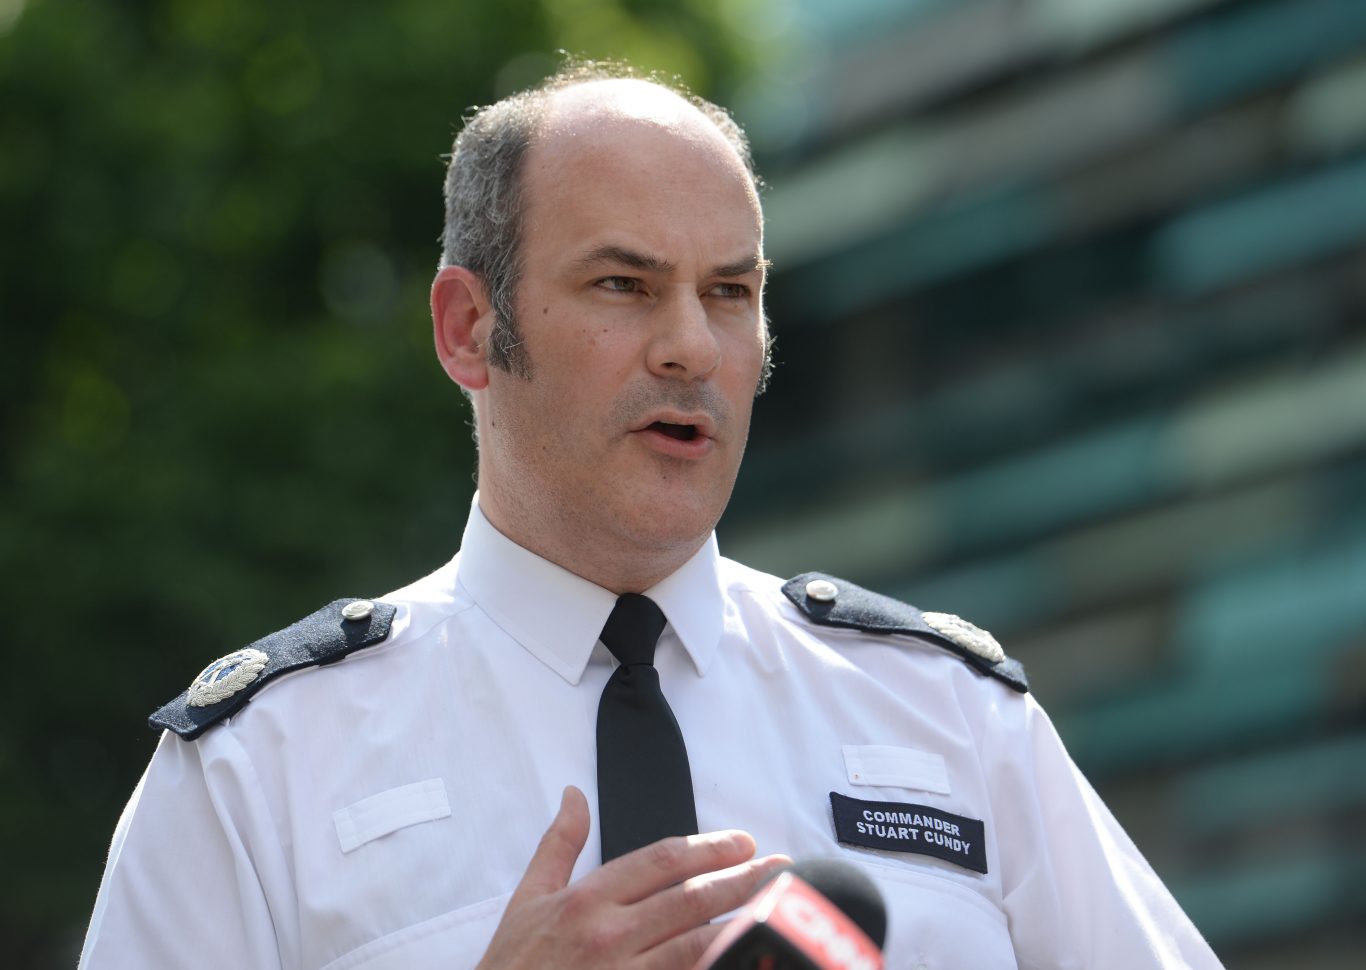 Metropolitan Police Commander Stuart Cundy